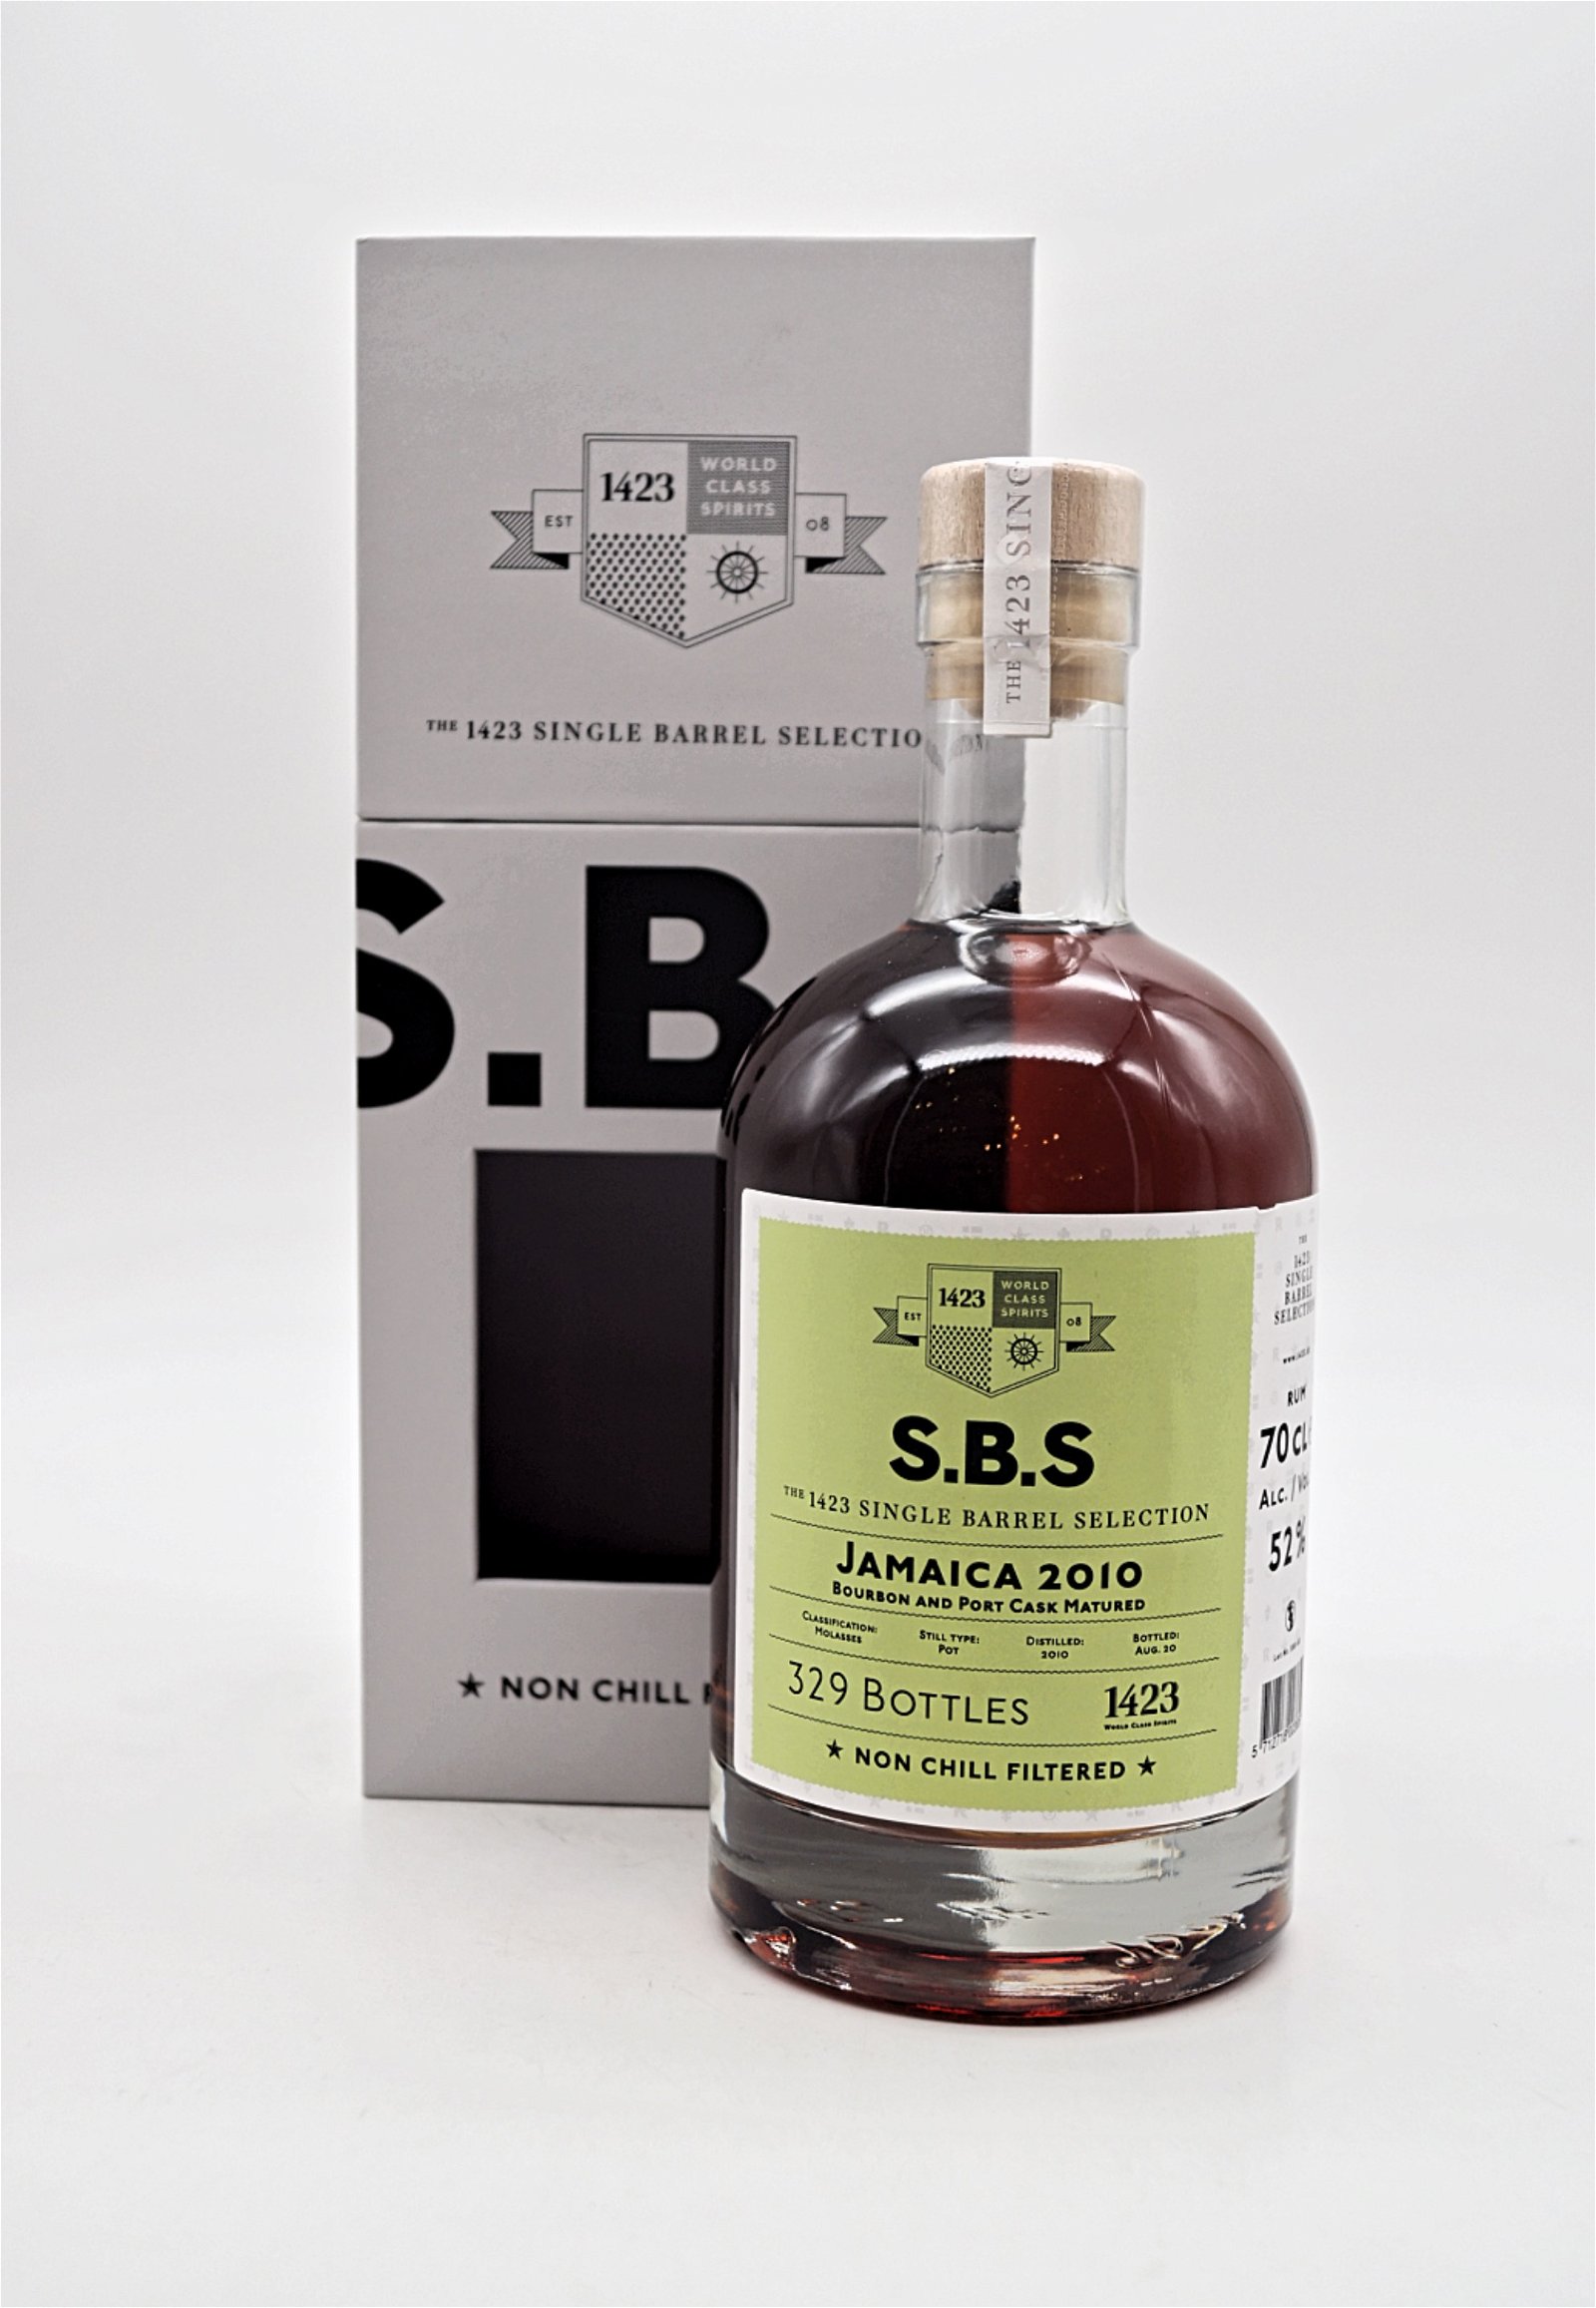 SBS Jamaica 2010 Bourbon and Port Cask Matured Single Barrel Selection Rum